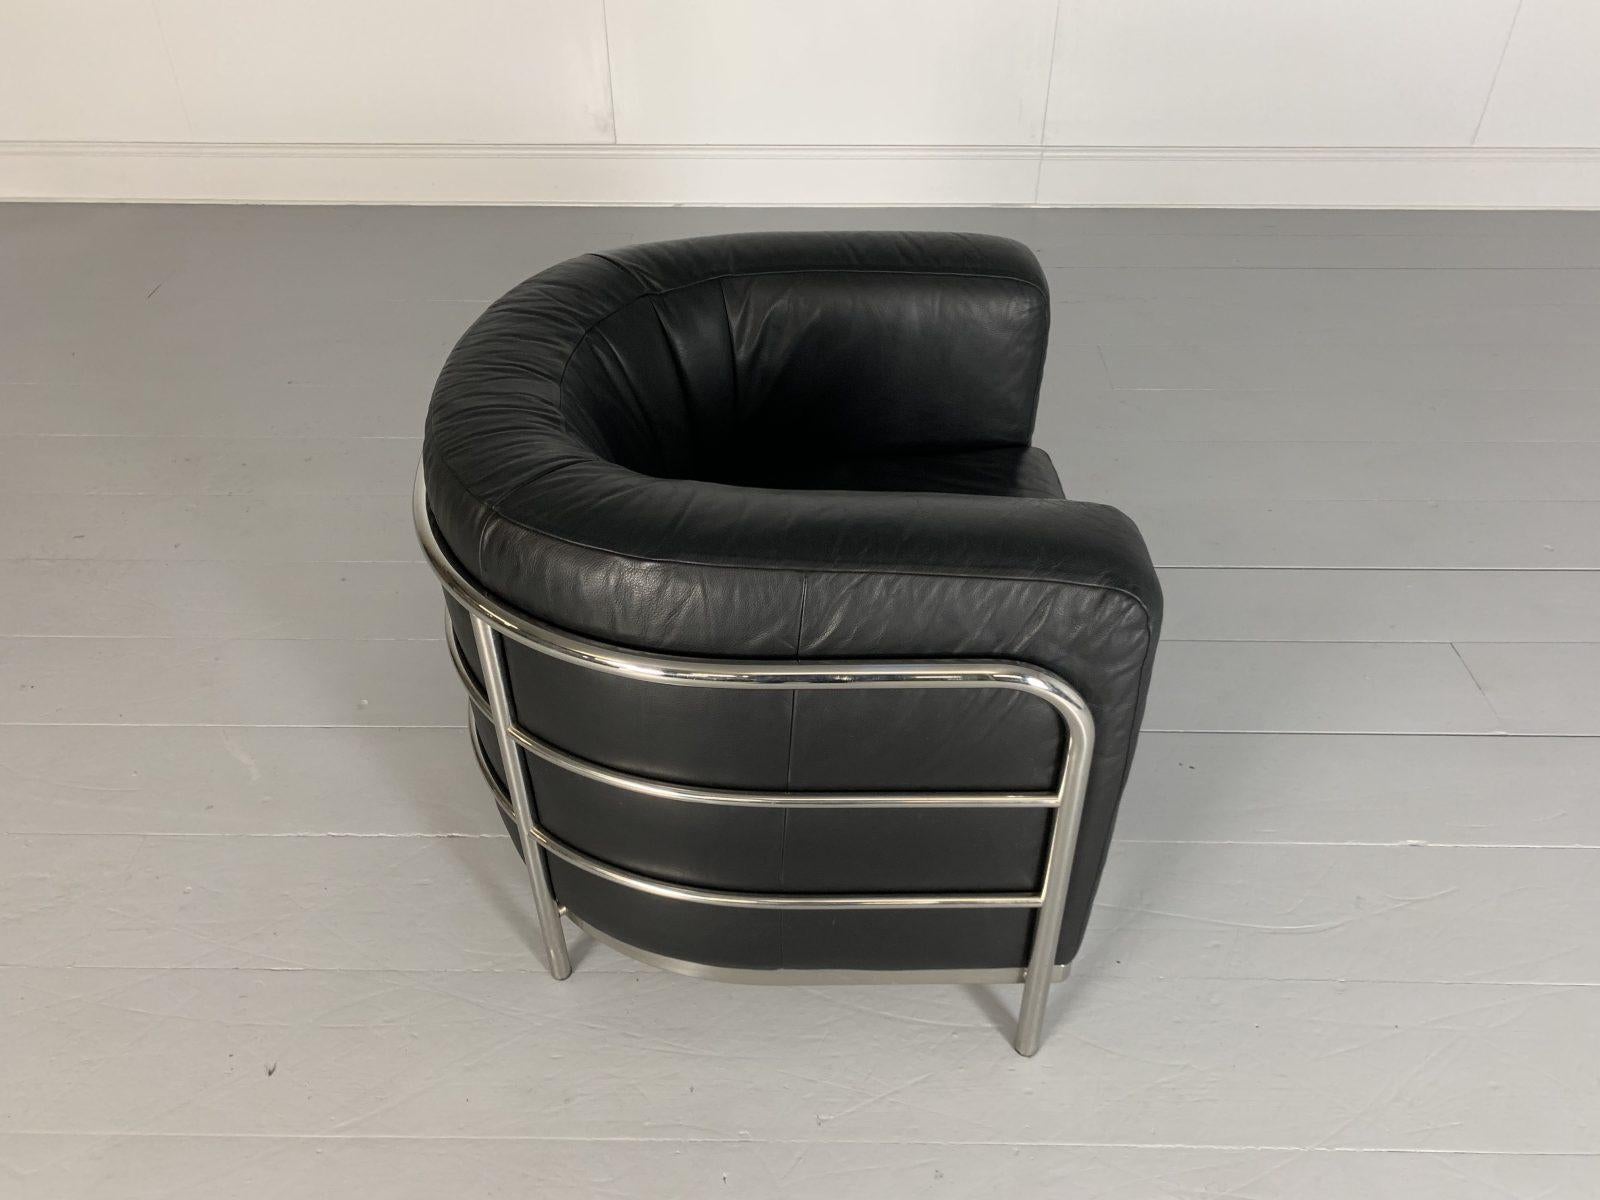 Zanotta “Onda” Armchair, in Black “Scozia” Leather and Chrome 5